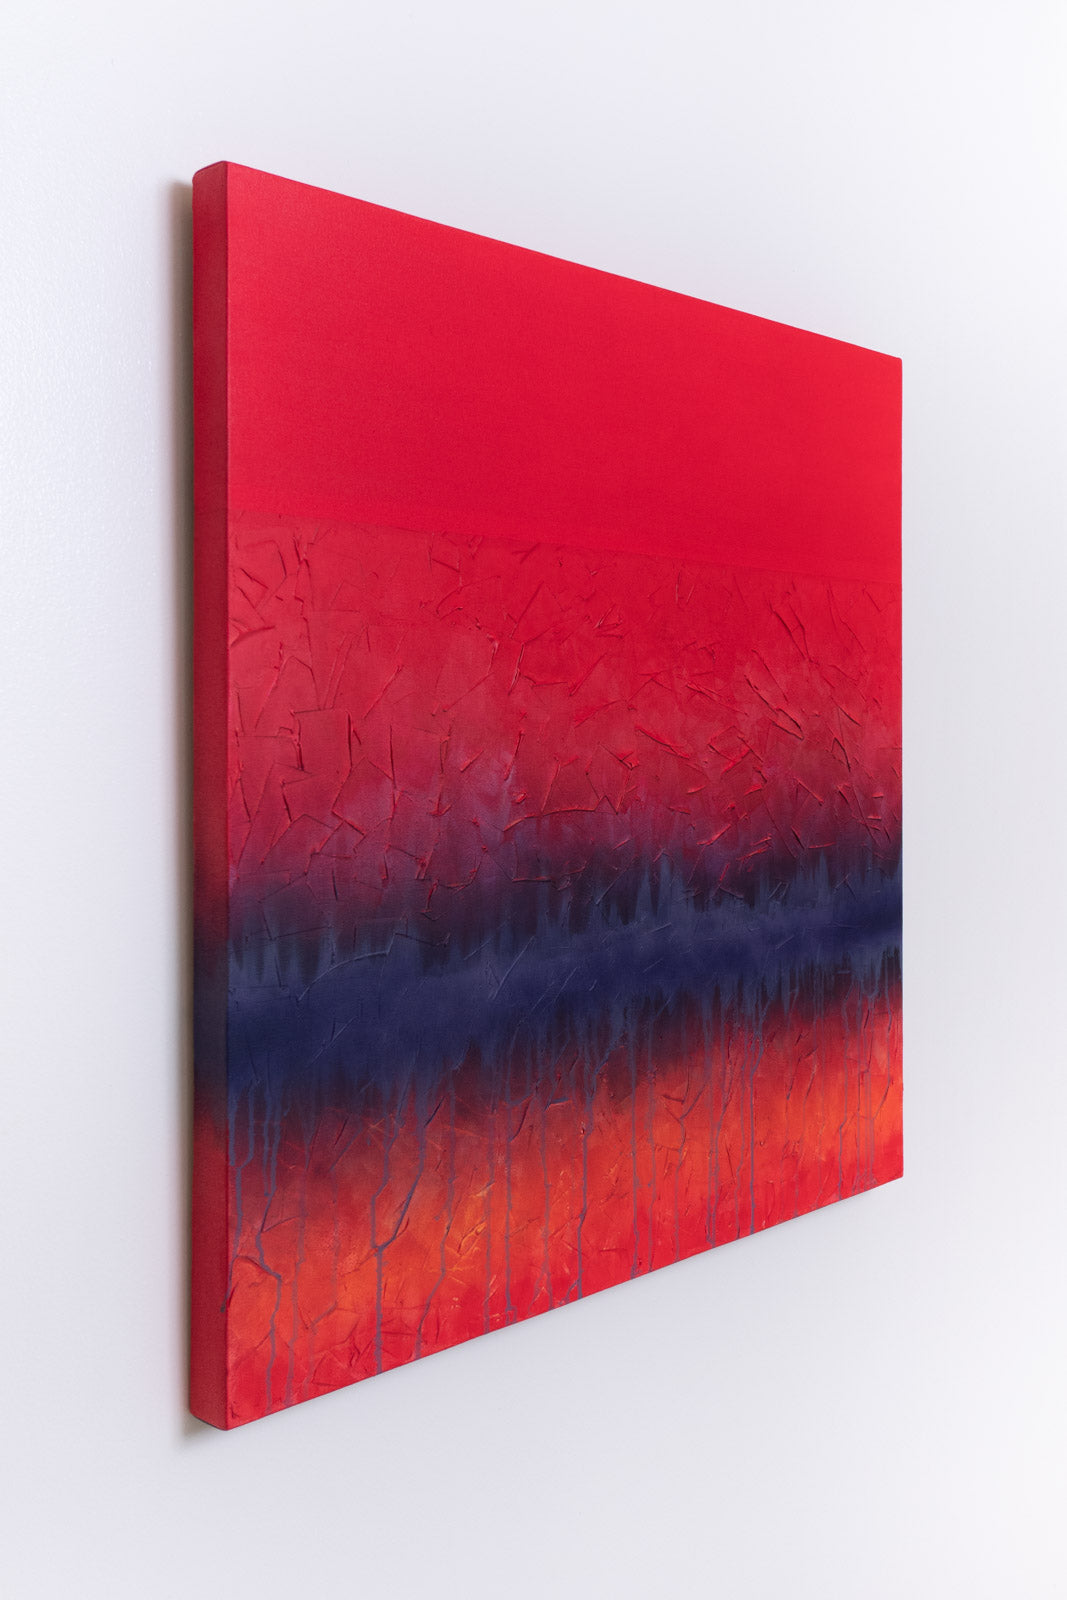 Desire's Horizon - Acrylic & Spray Paint on Canvas